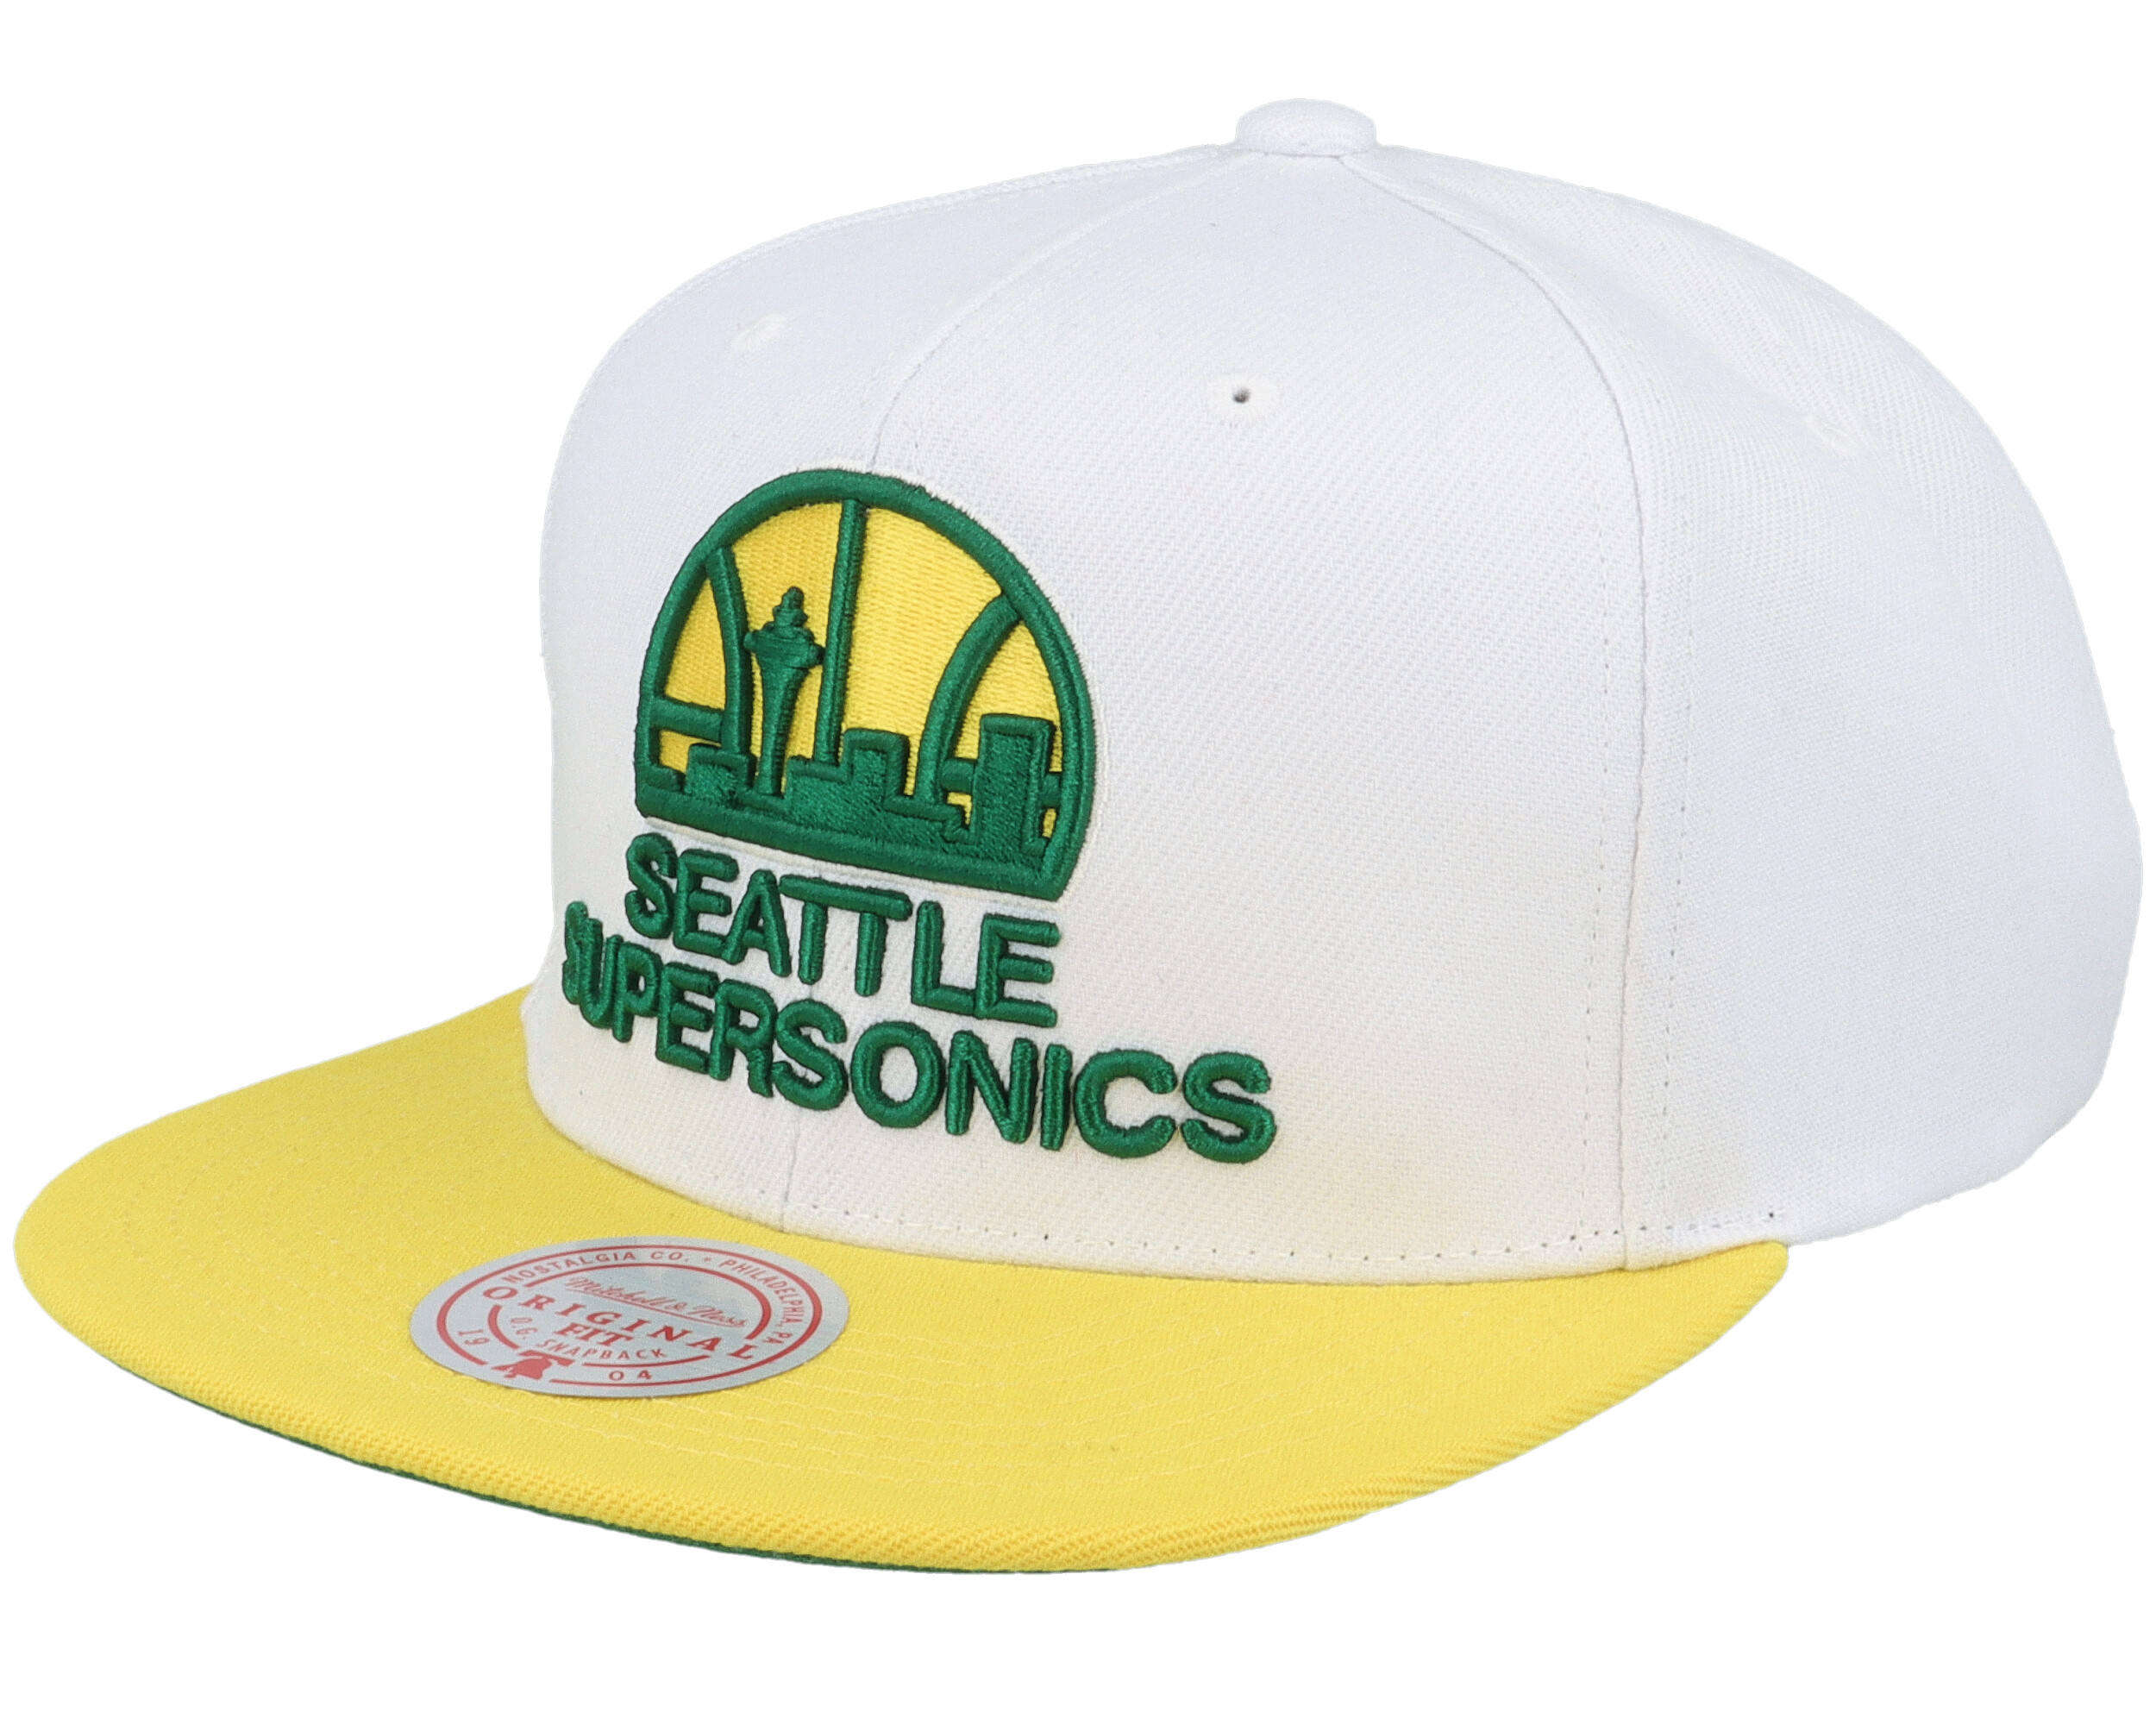 Mitchell & Ness Seattle SuperSonics Classic Script Snapback, Yellow, Size